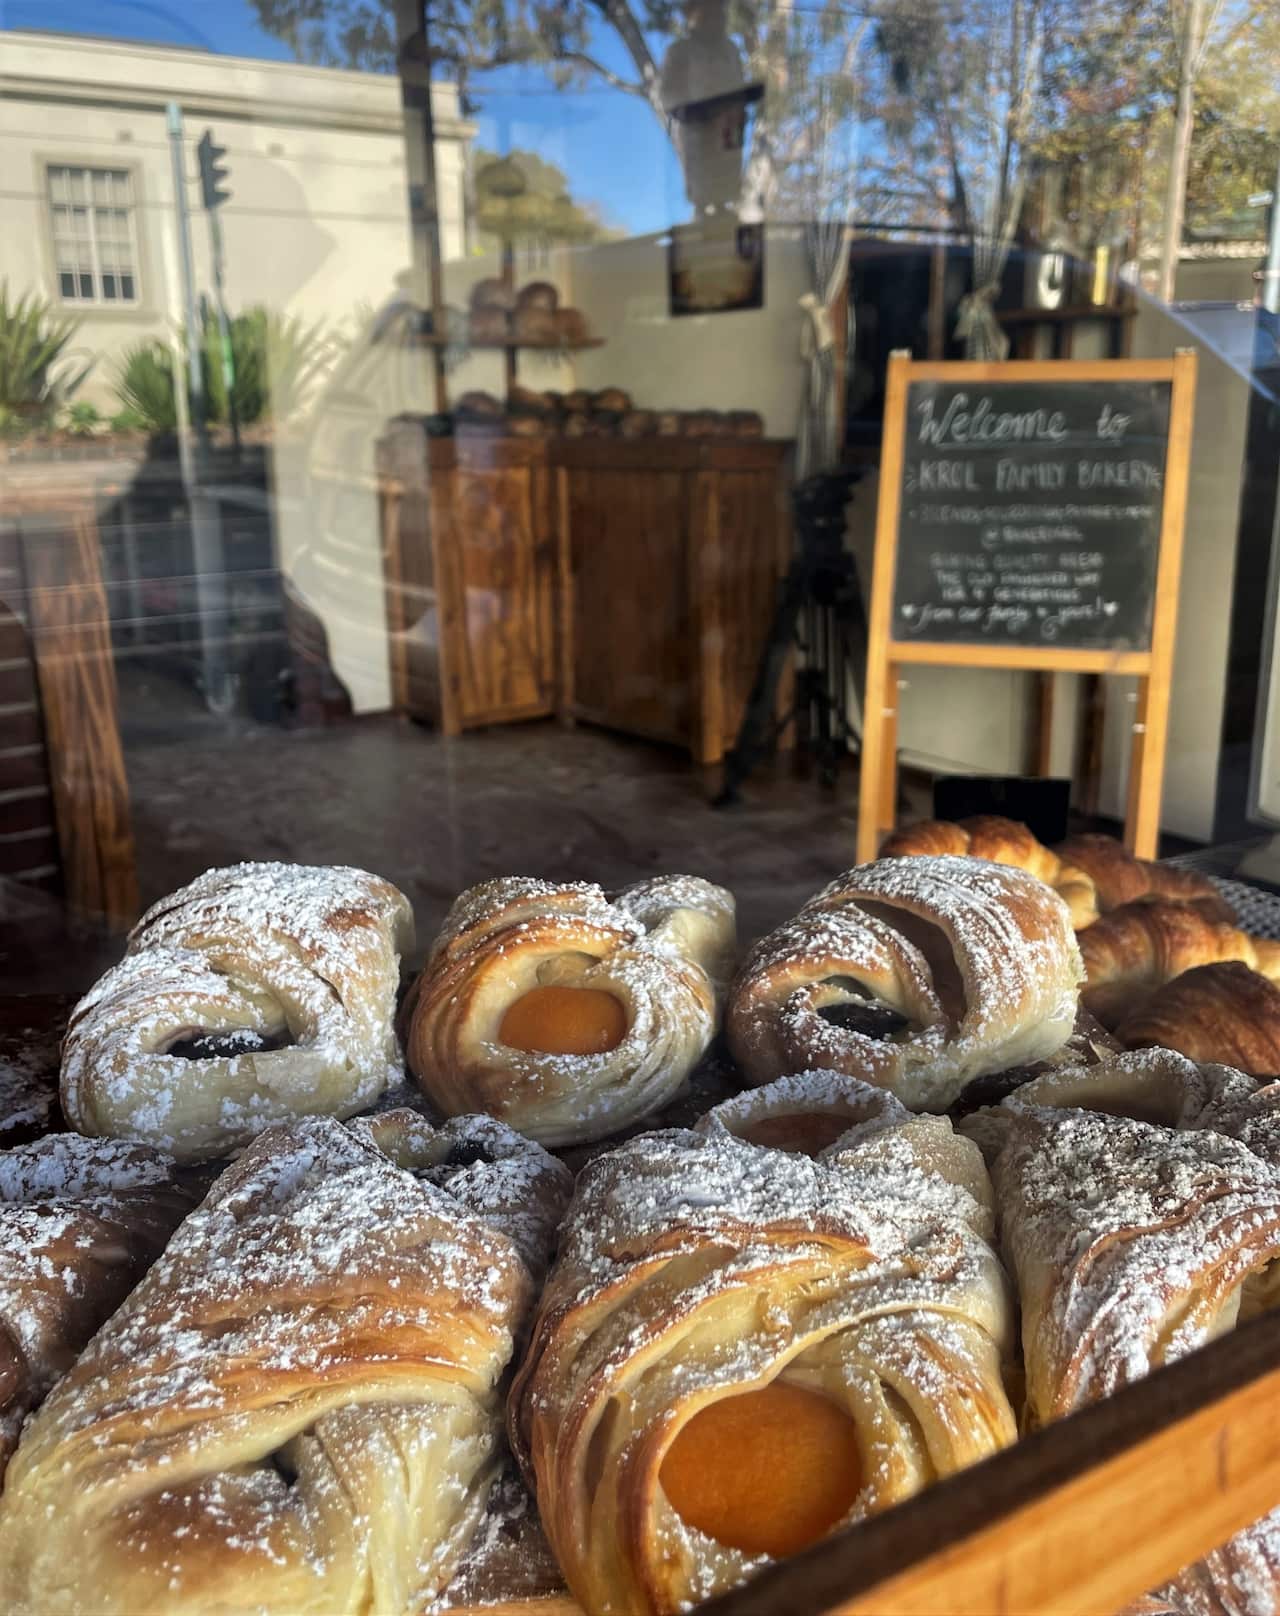 Danish pastries in a shopfront window.